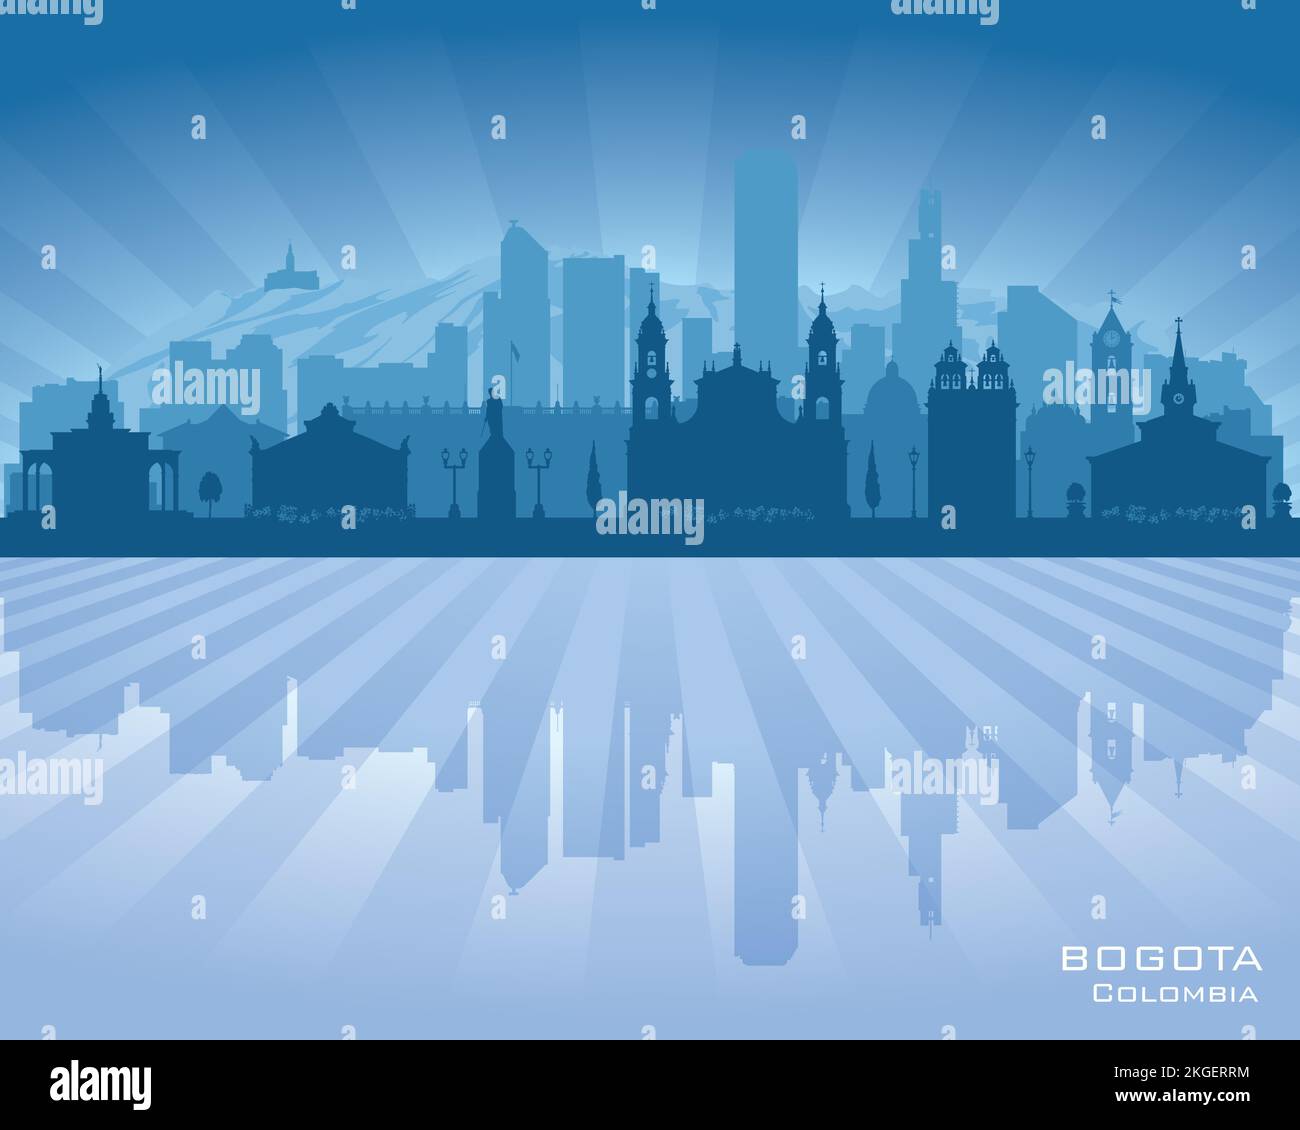 Bogota Colombia city skyline vector silhouette illustration Stock Vector